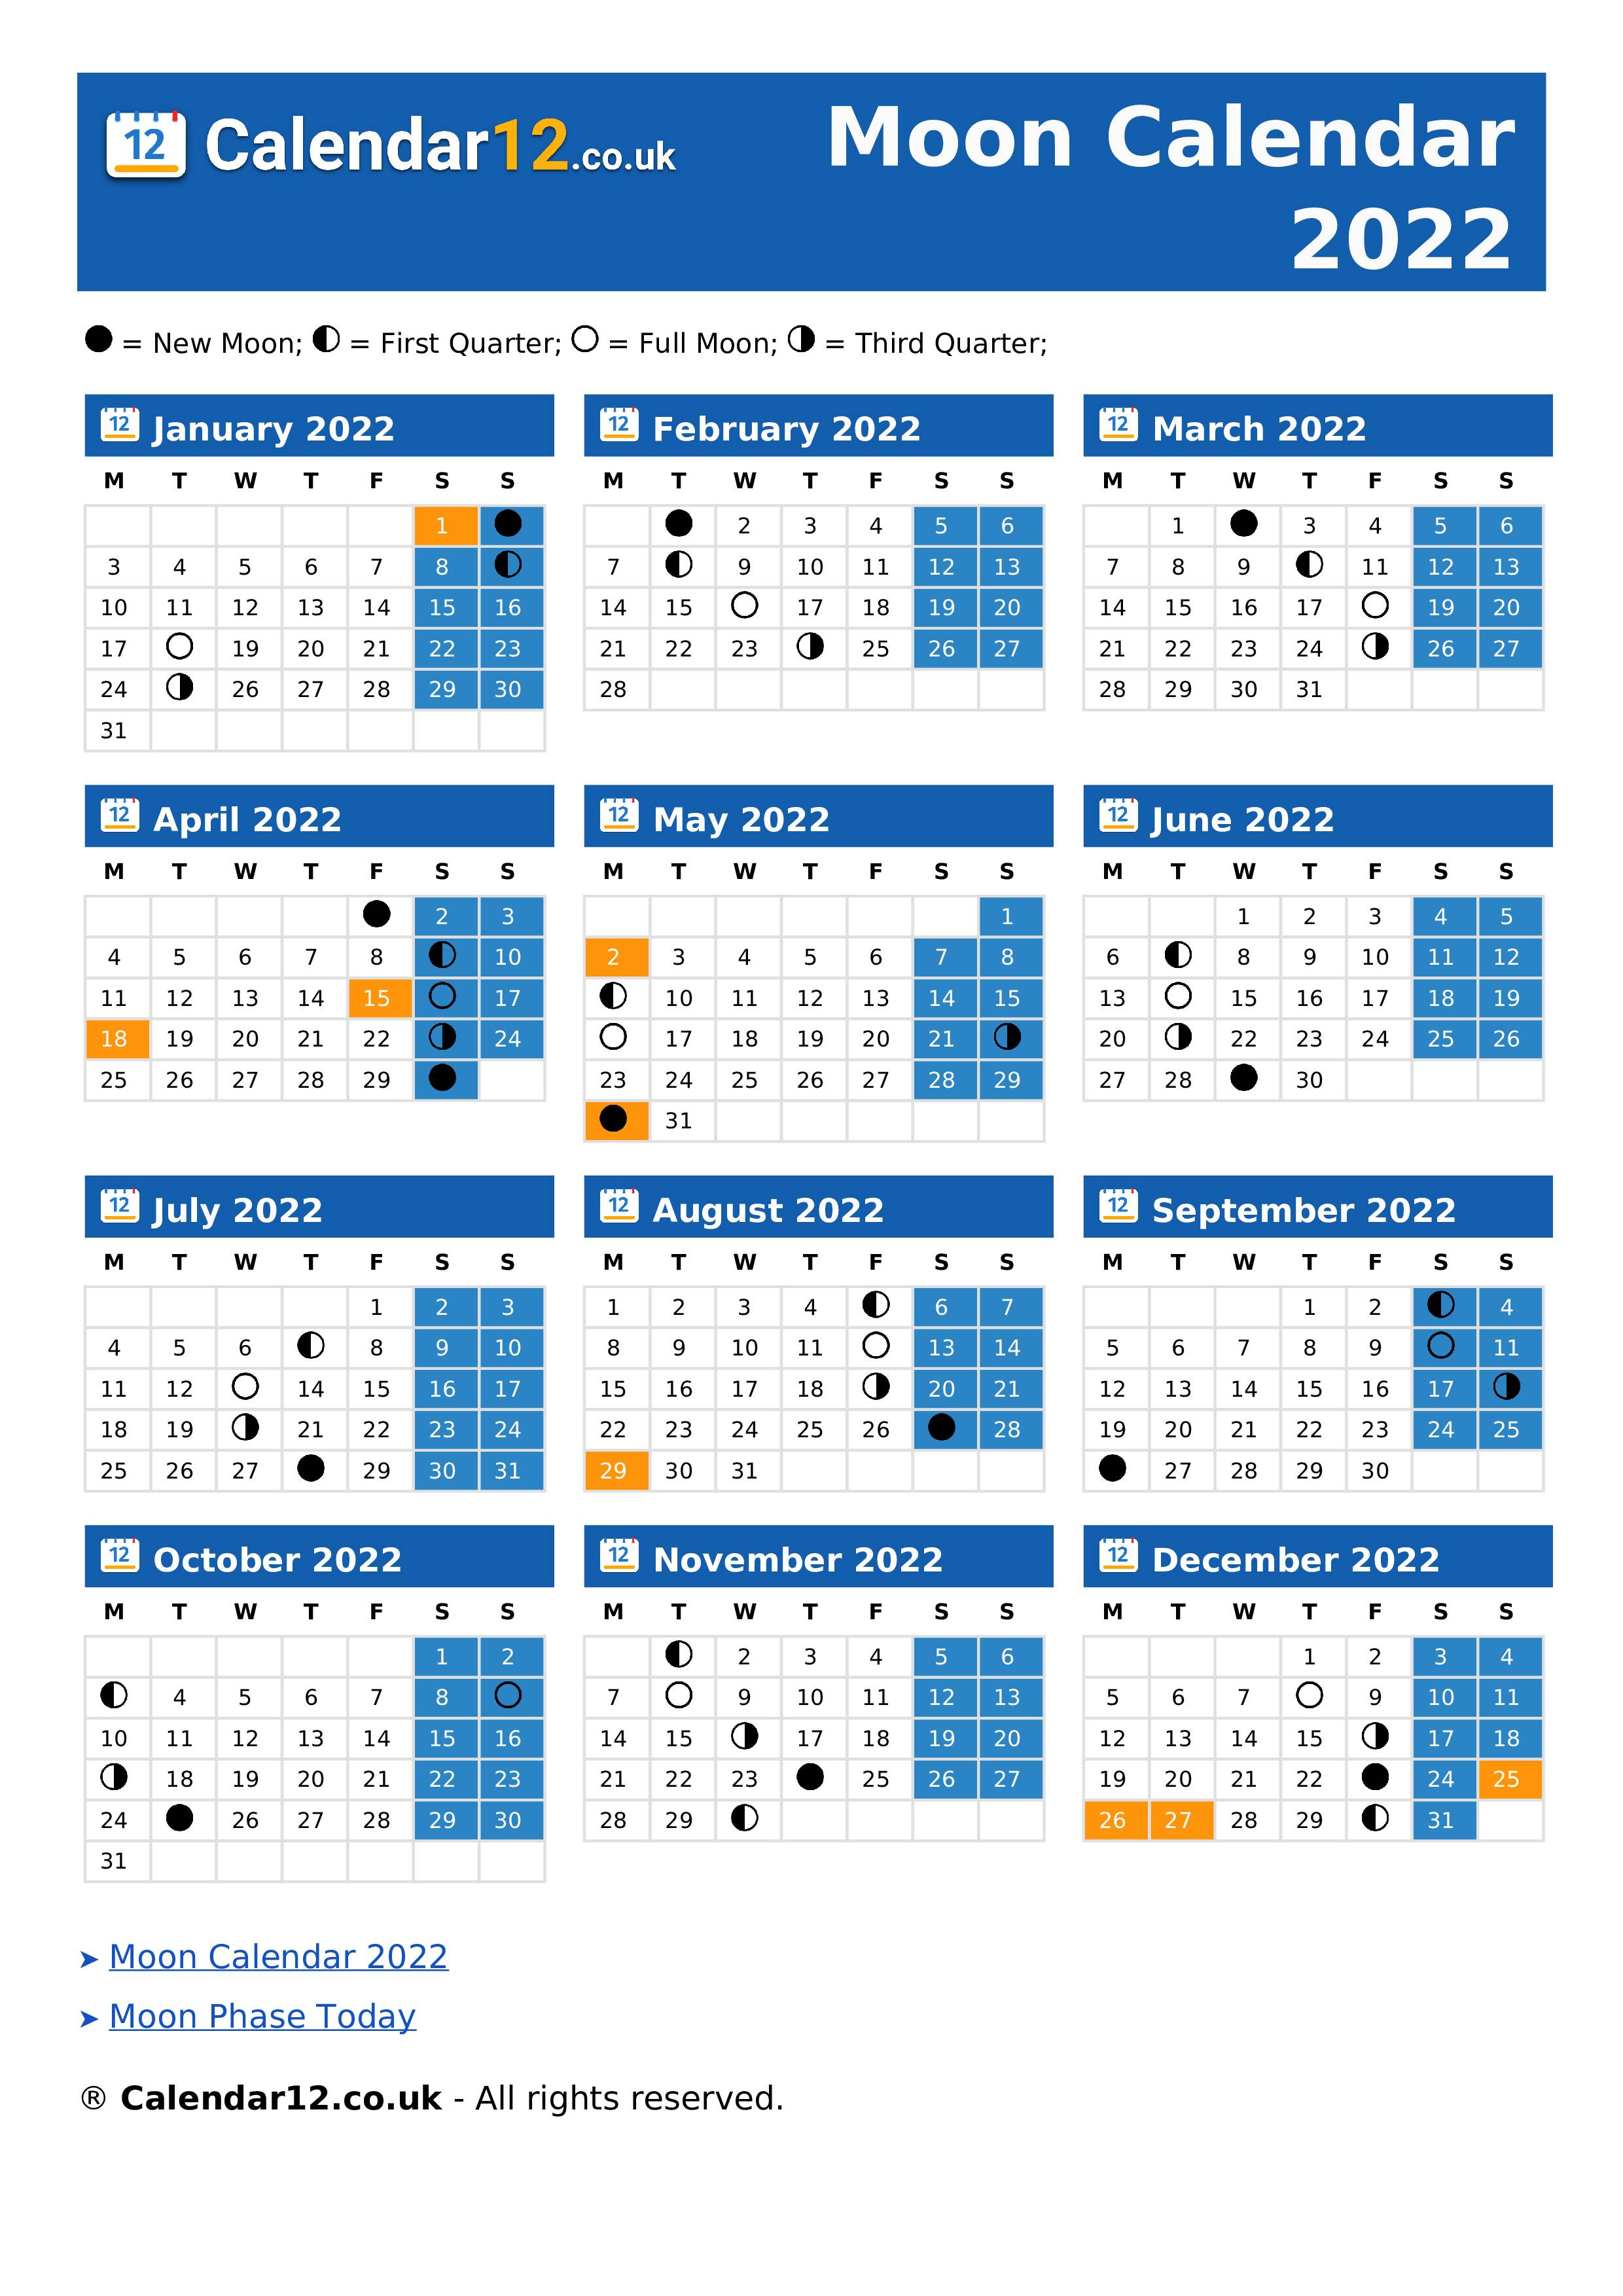 Lunar Calendar December 2022 Moon Calendar December 2022 ⬅️ — Calendar12.Co.uk